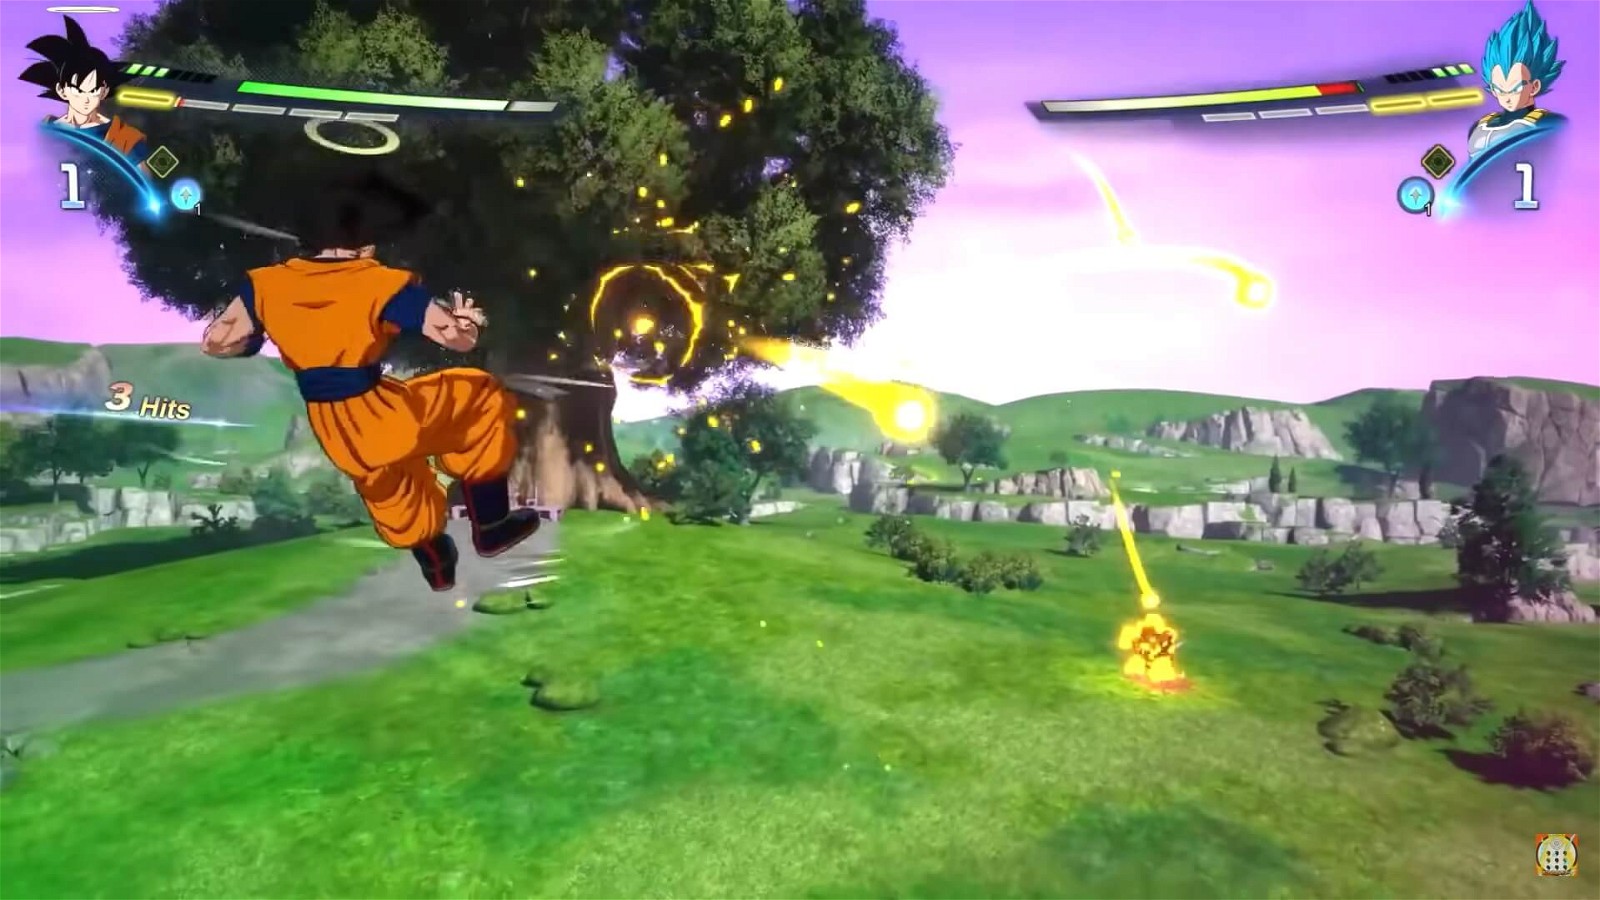 Goku using Ki blasts against Vegeta in Dragon Ball: Sparking Zero. Credits: RikudouFox on YouTube